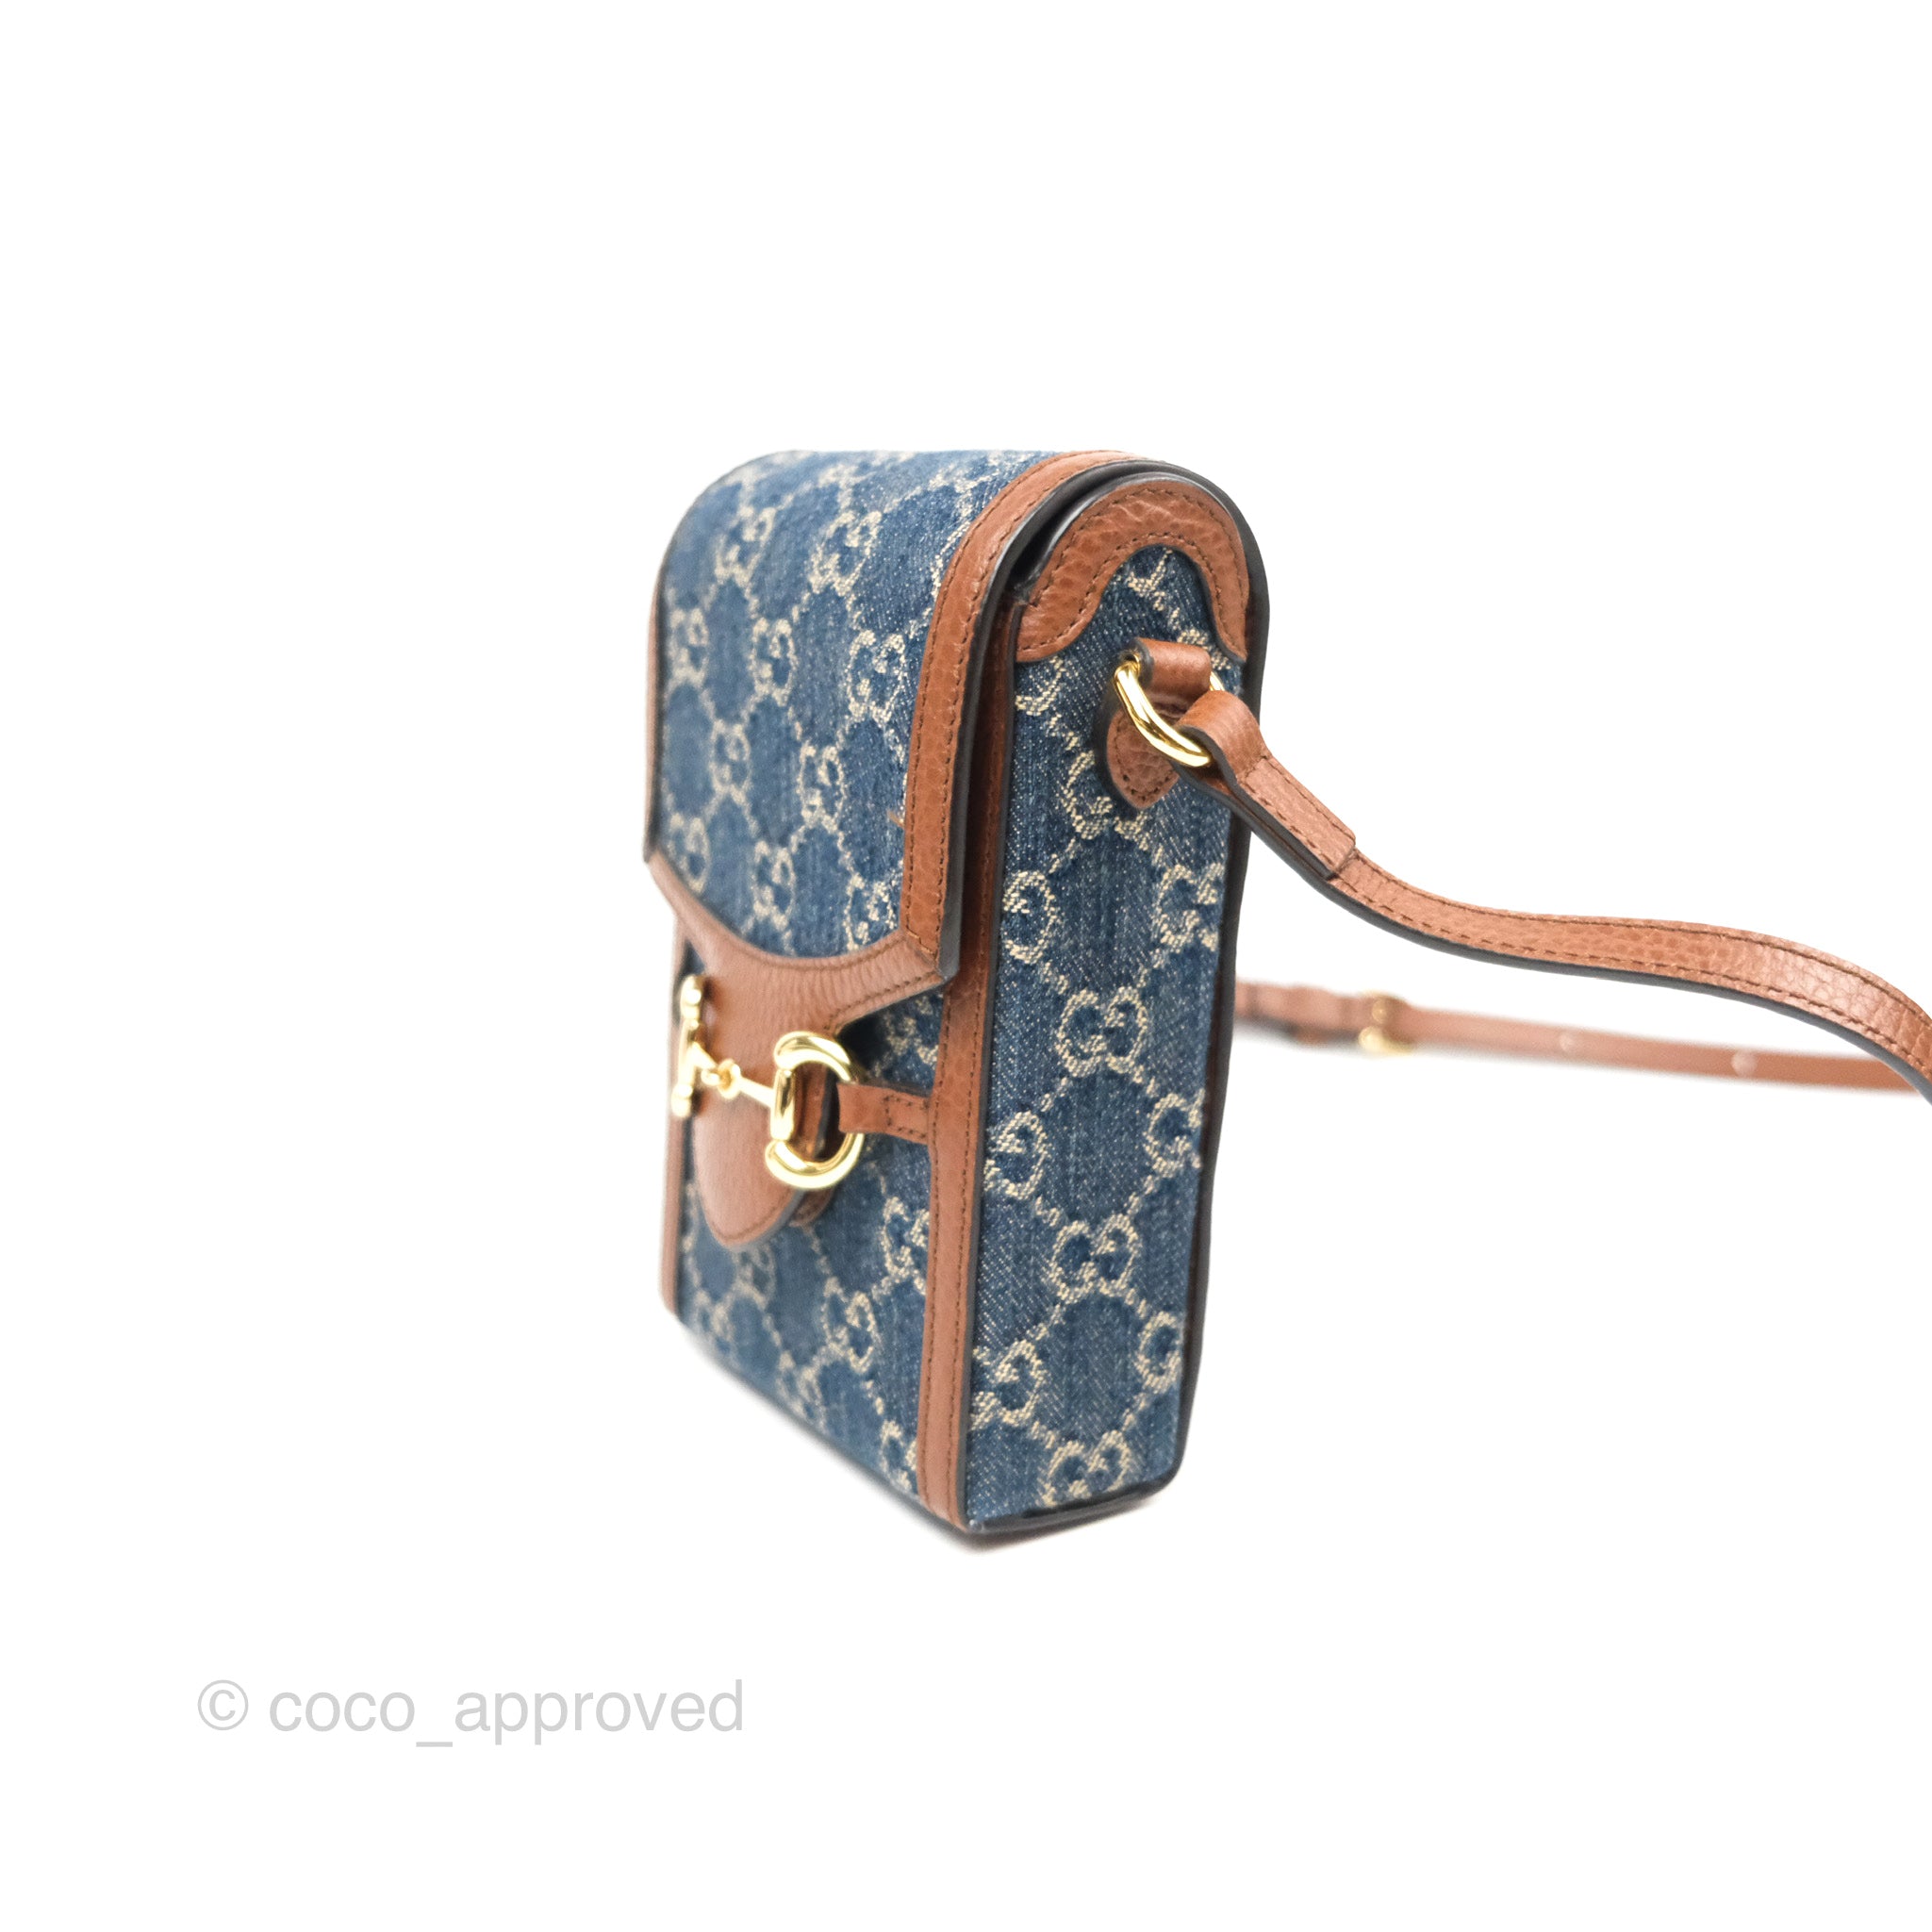 Gucci Horsebit 1955 mini bag in brown leather